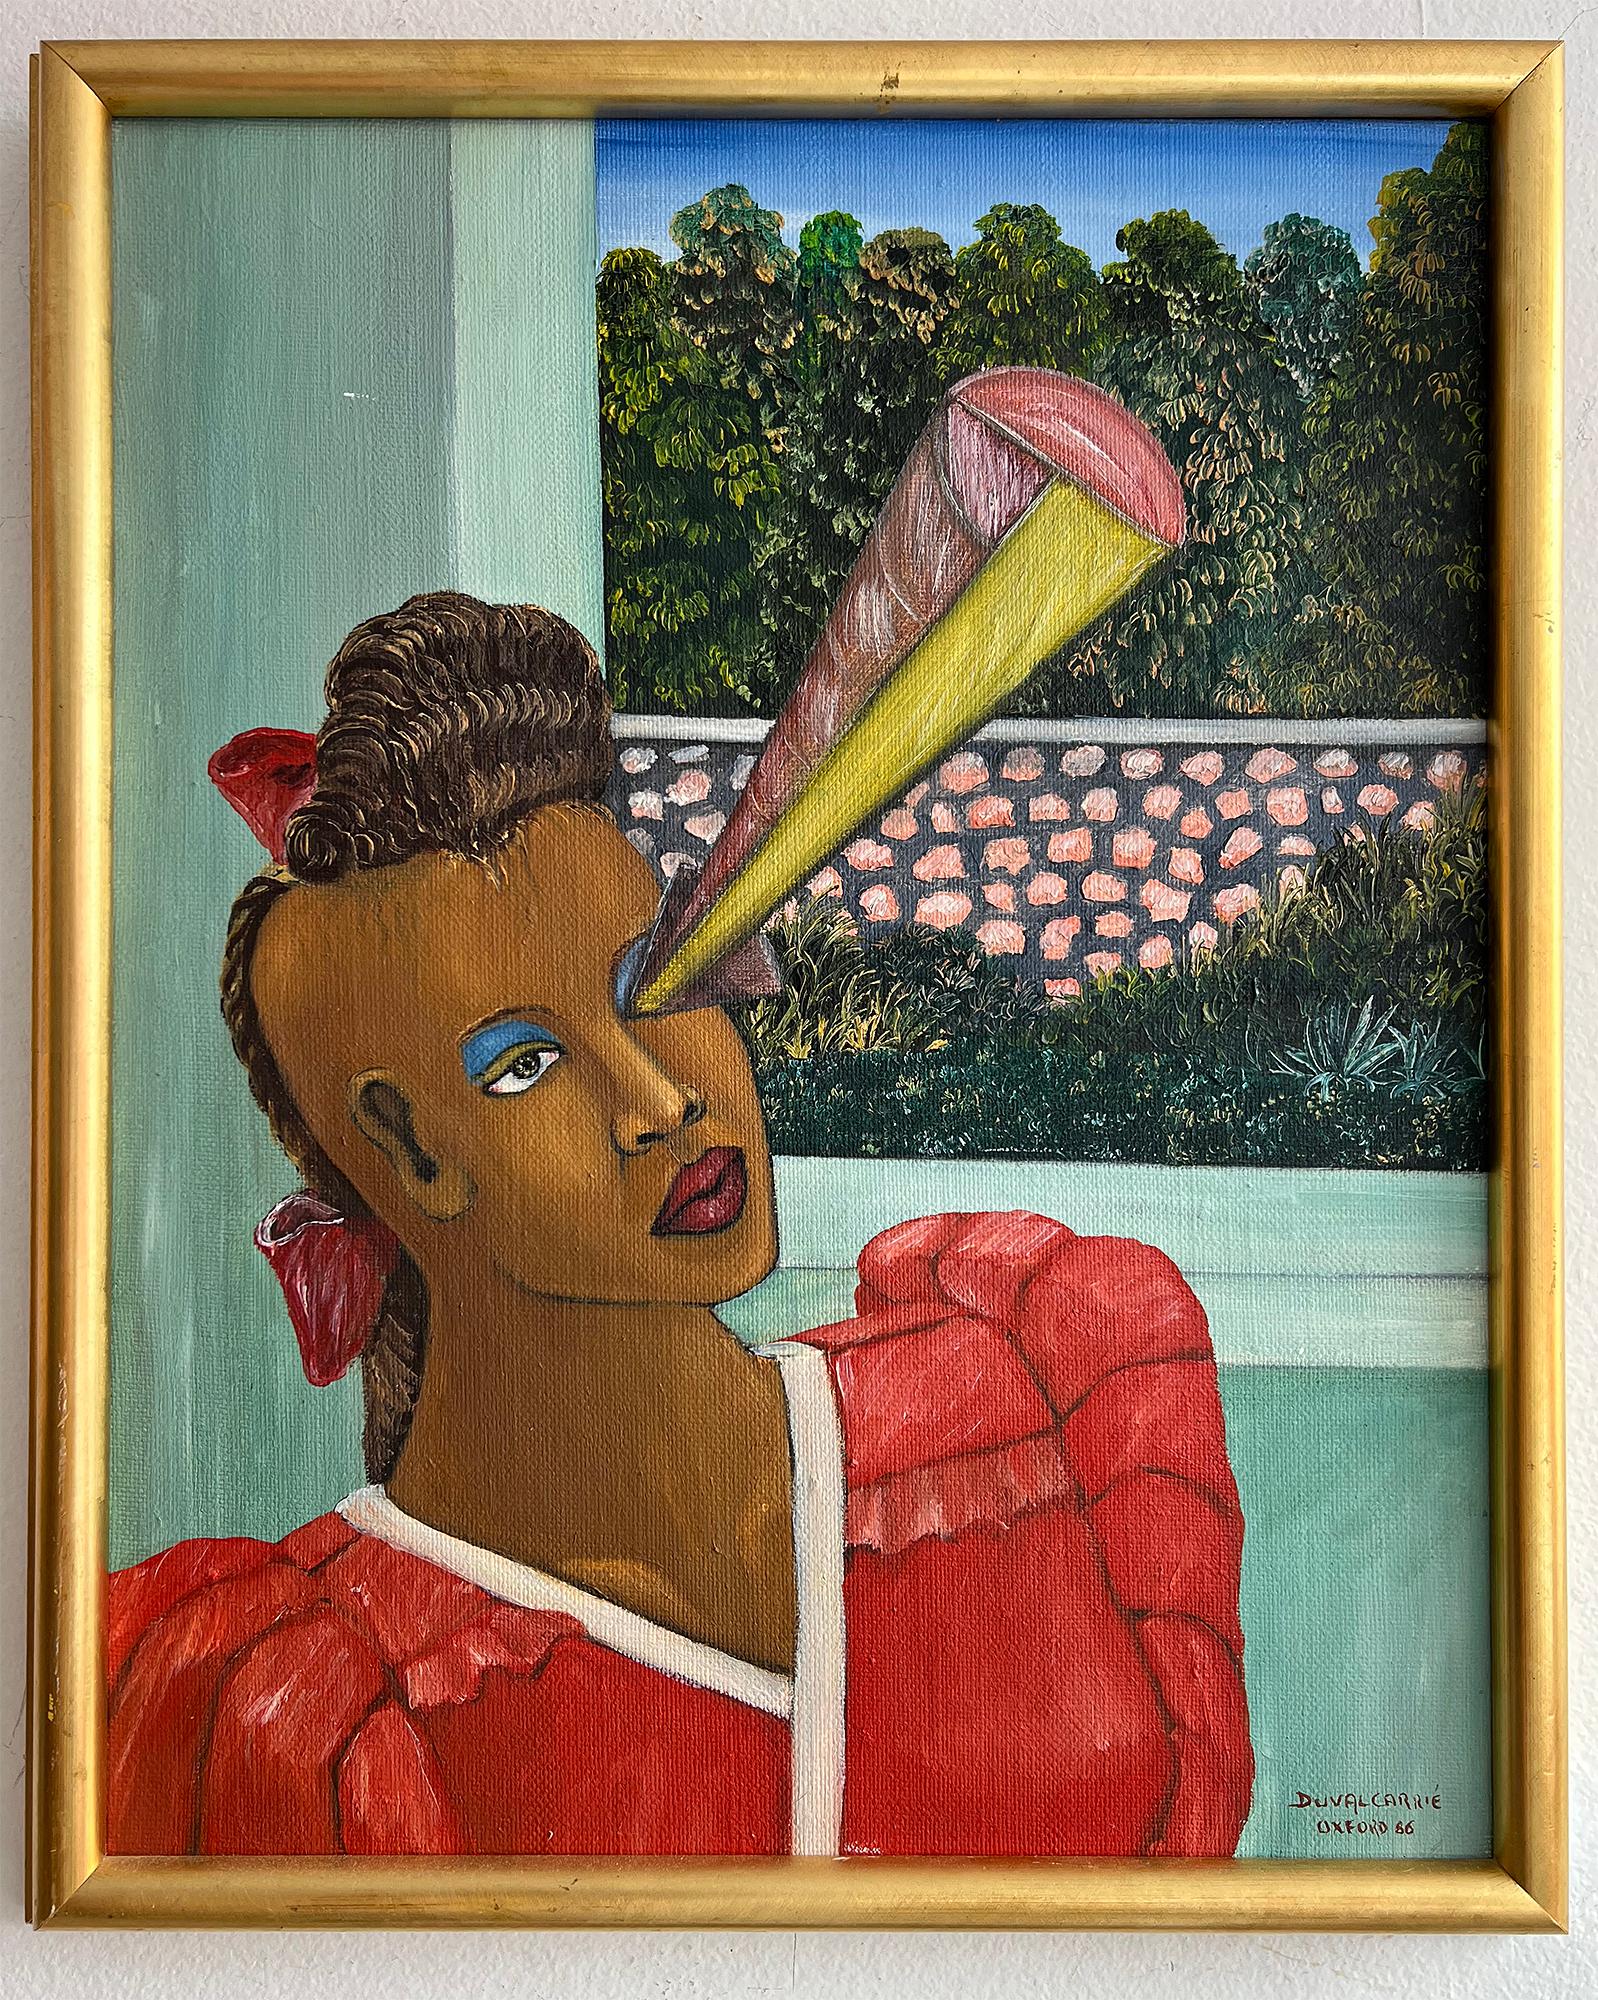 The Vision - Surreal Black Female Portrait - Painting by Edouard Duval-Carrié